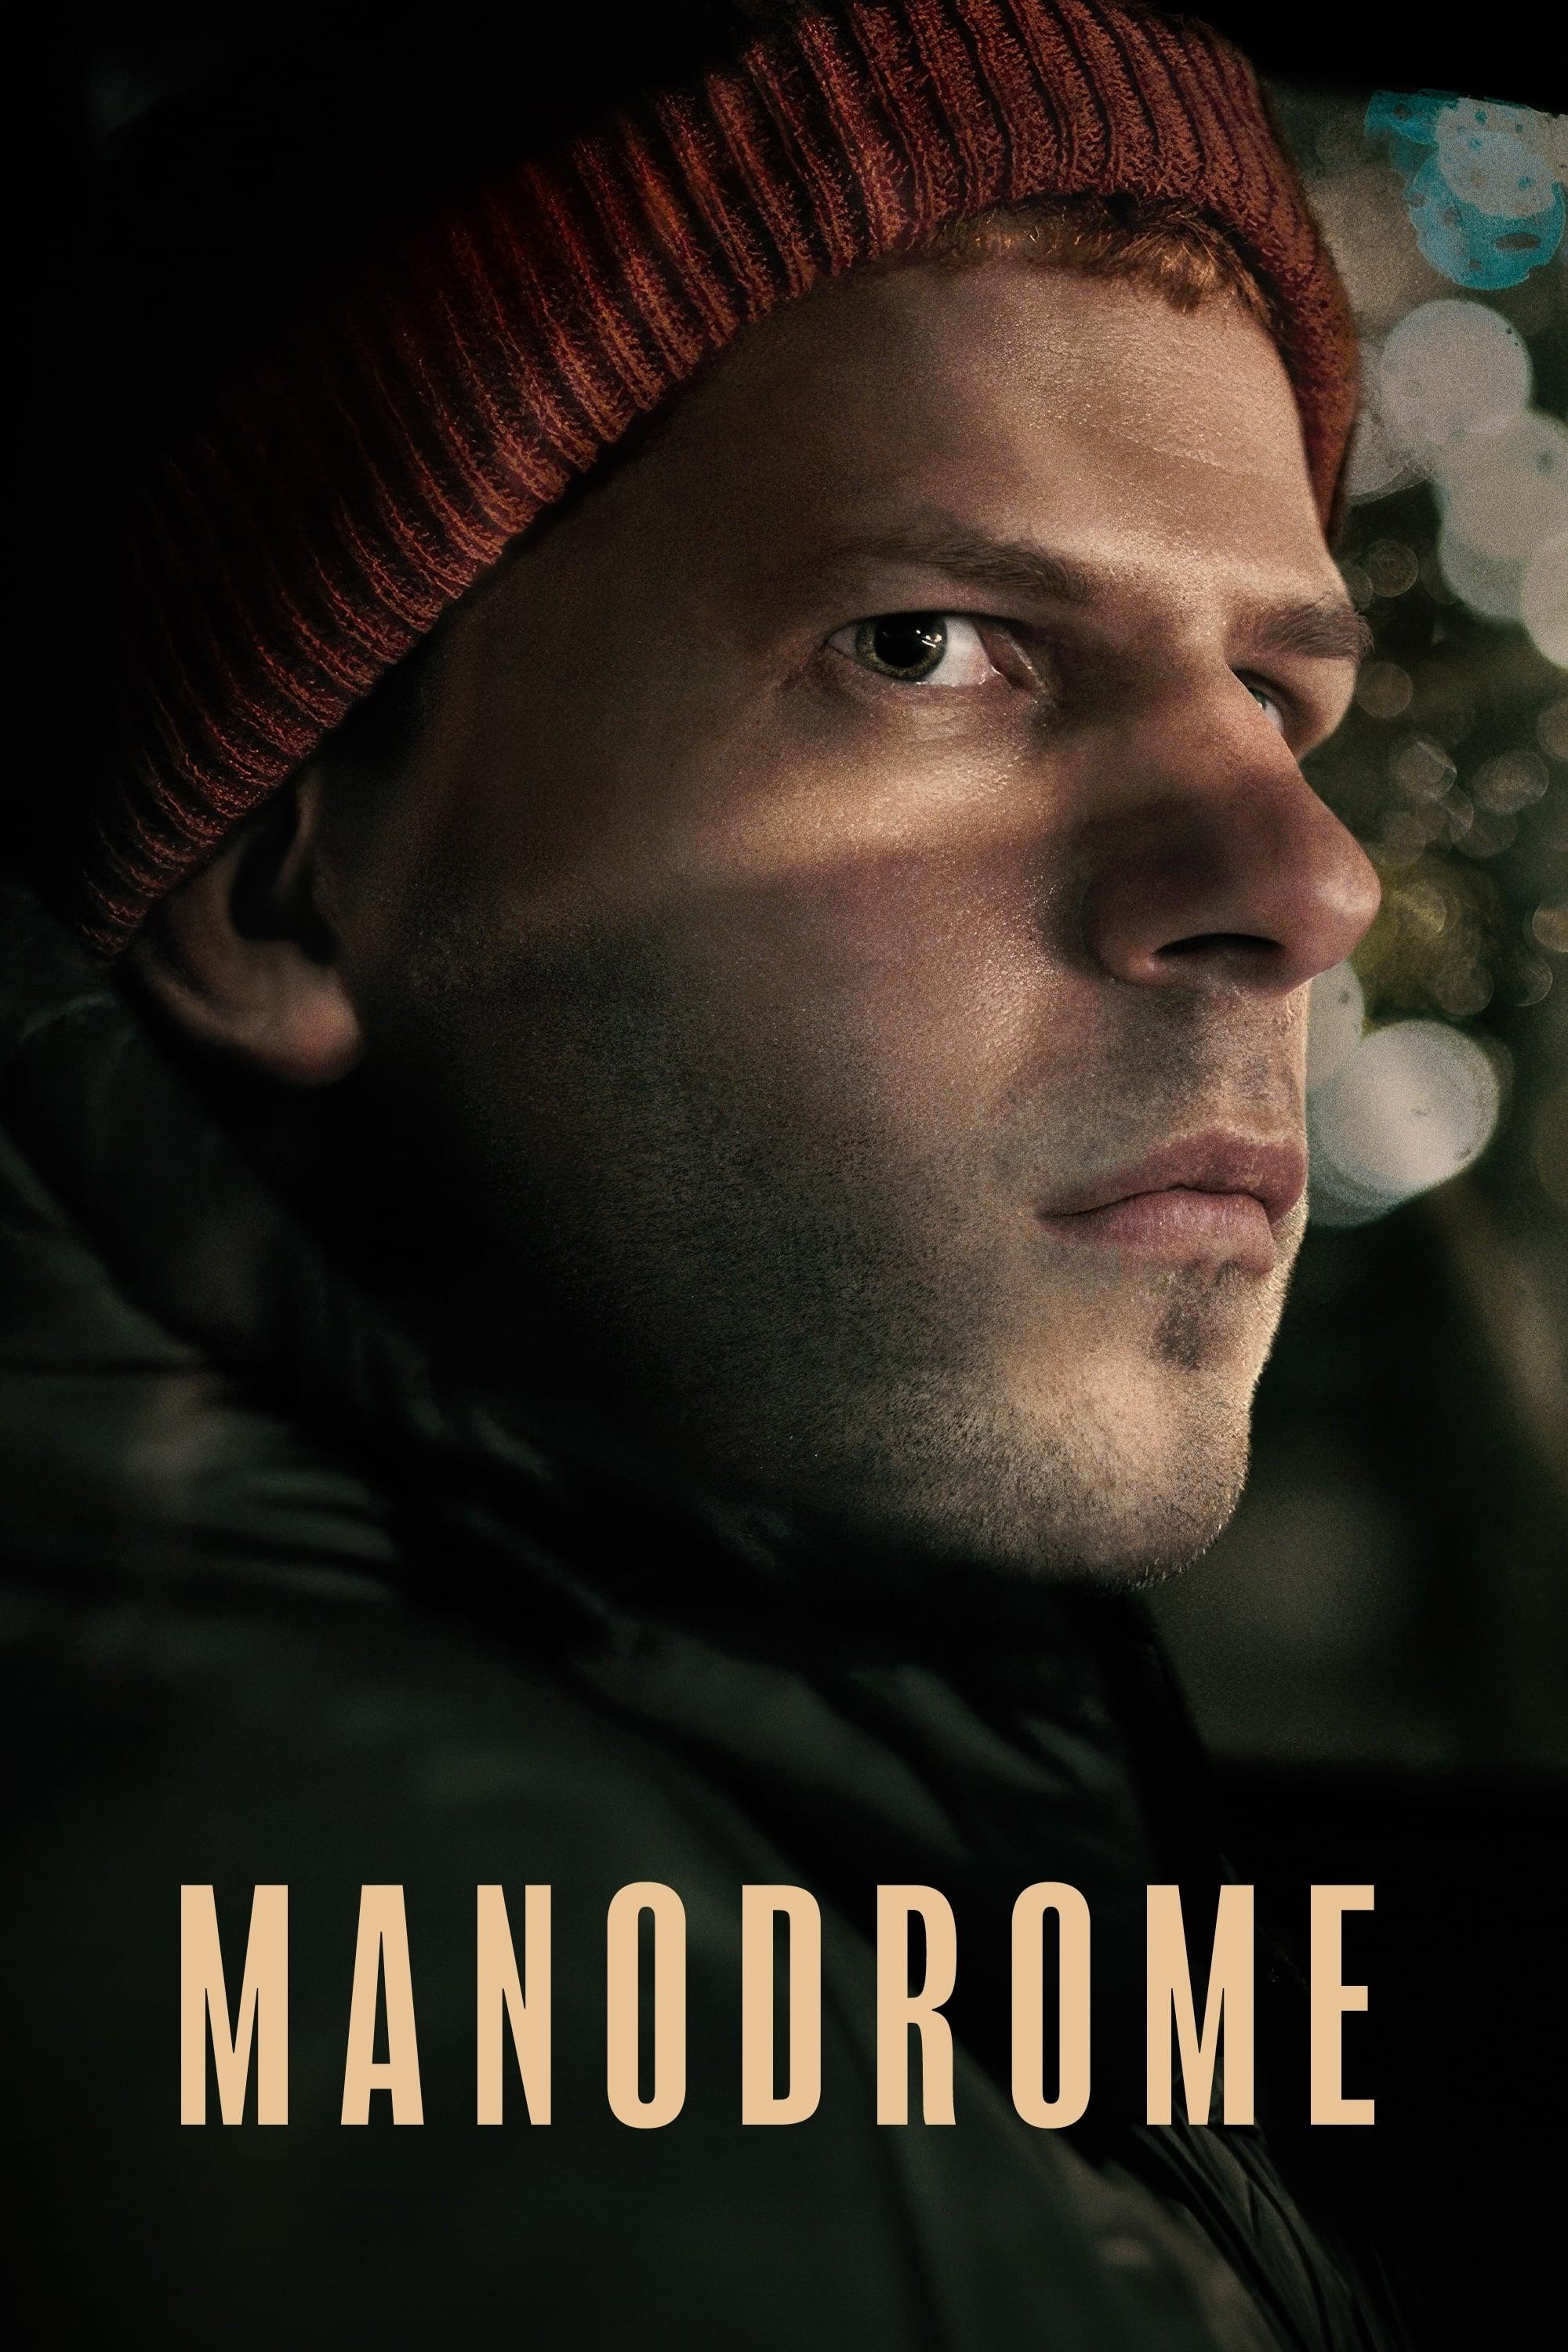 Manodrome poster